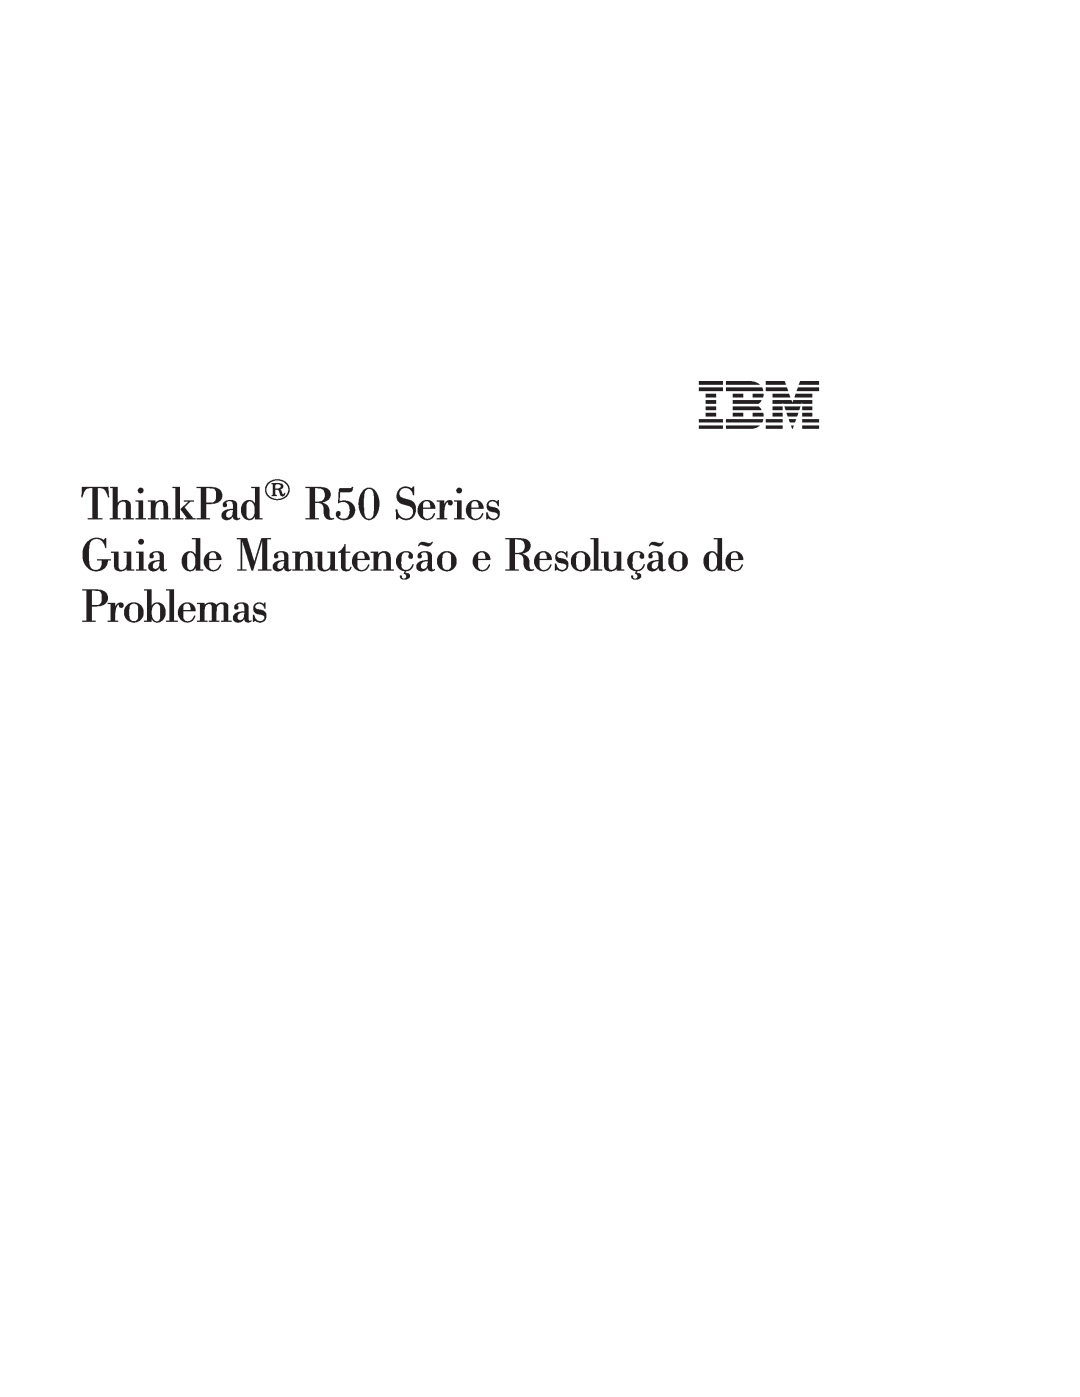 IBM manual ThinkPad R50 Series, Håndbok for service og problemløsing 